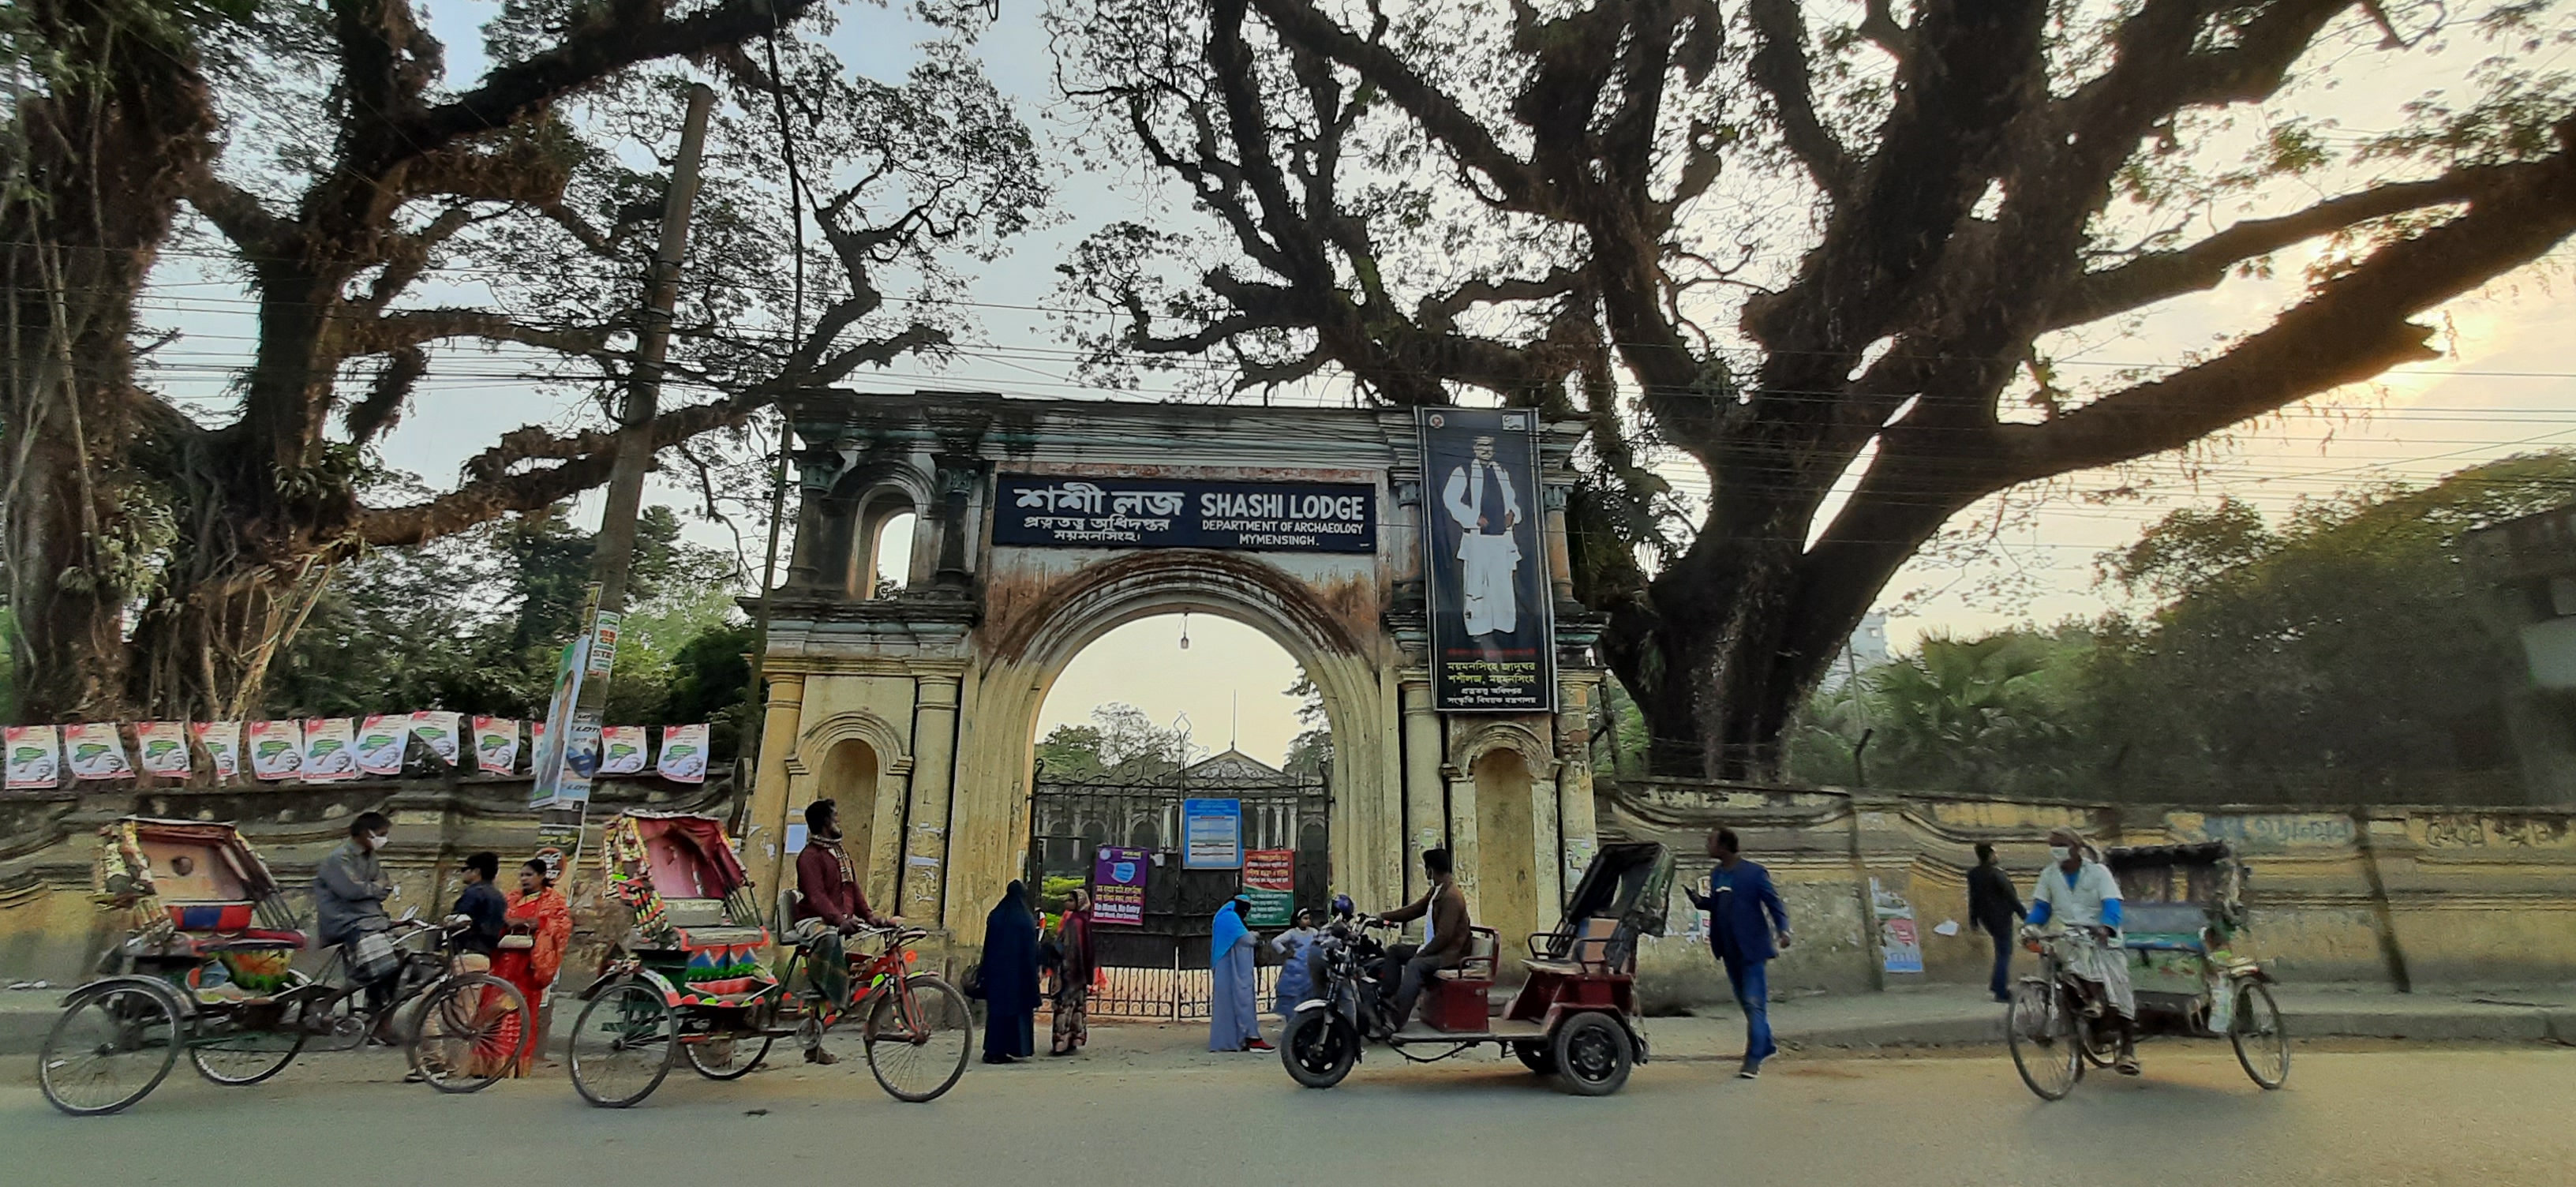 bangladesh cities-Mymansingh
